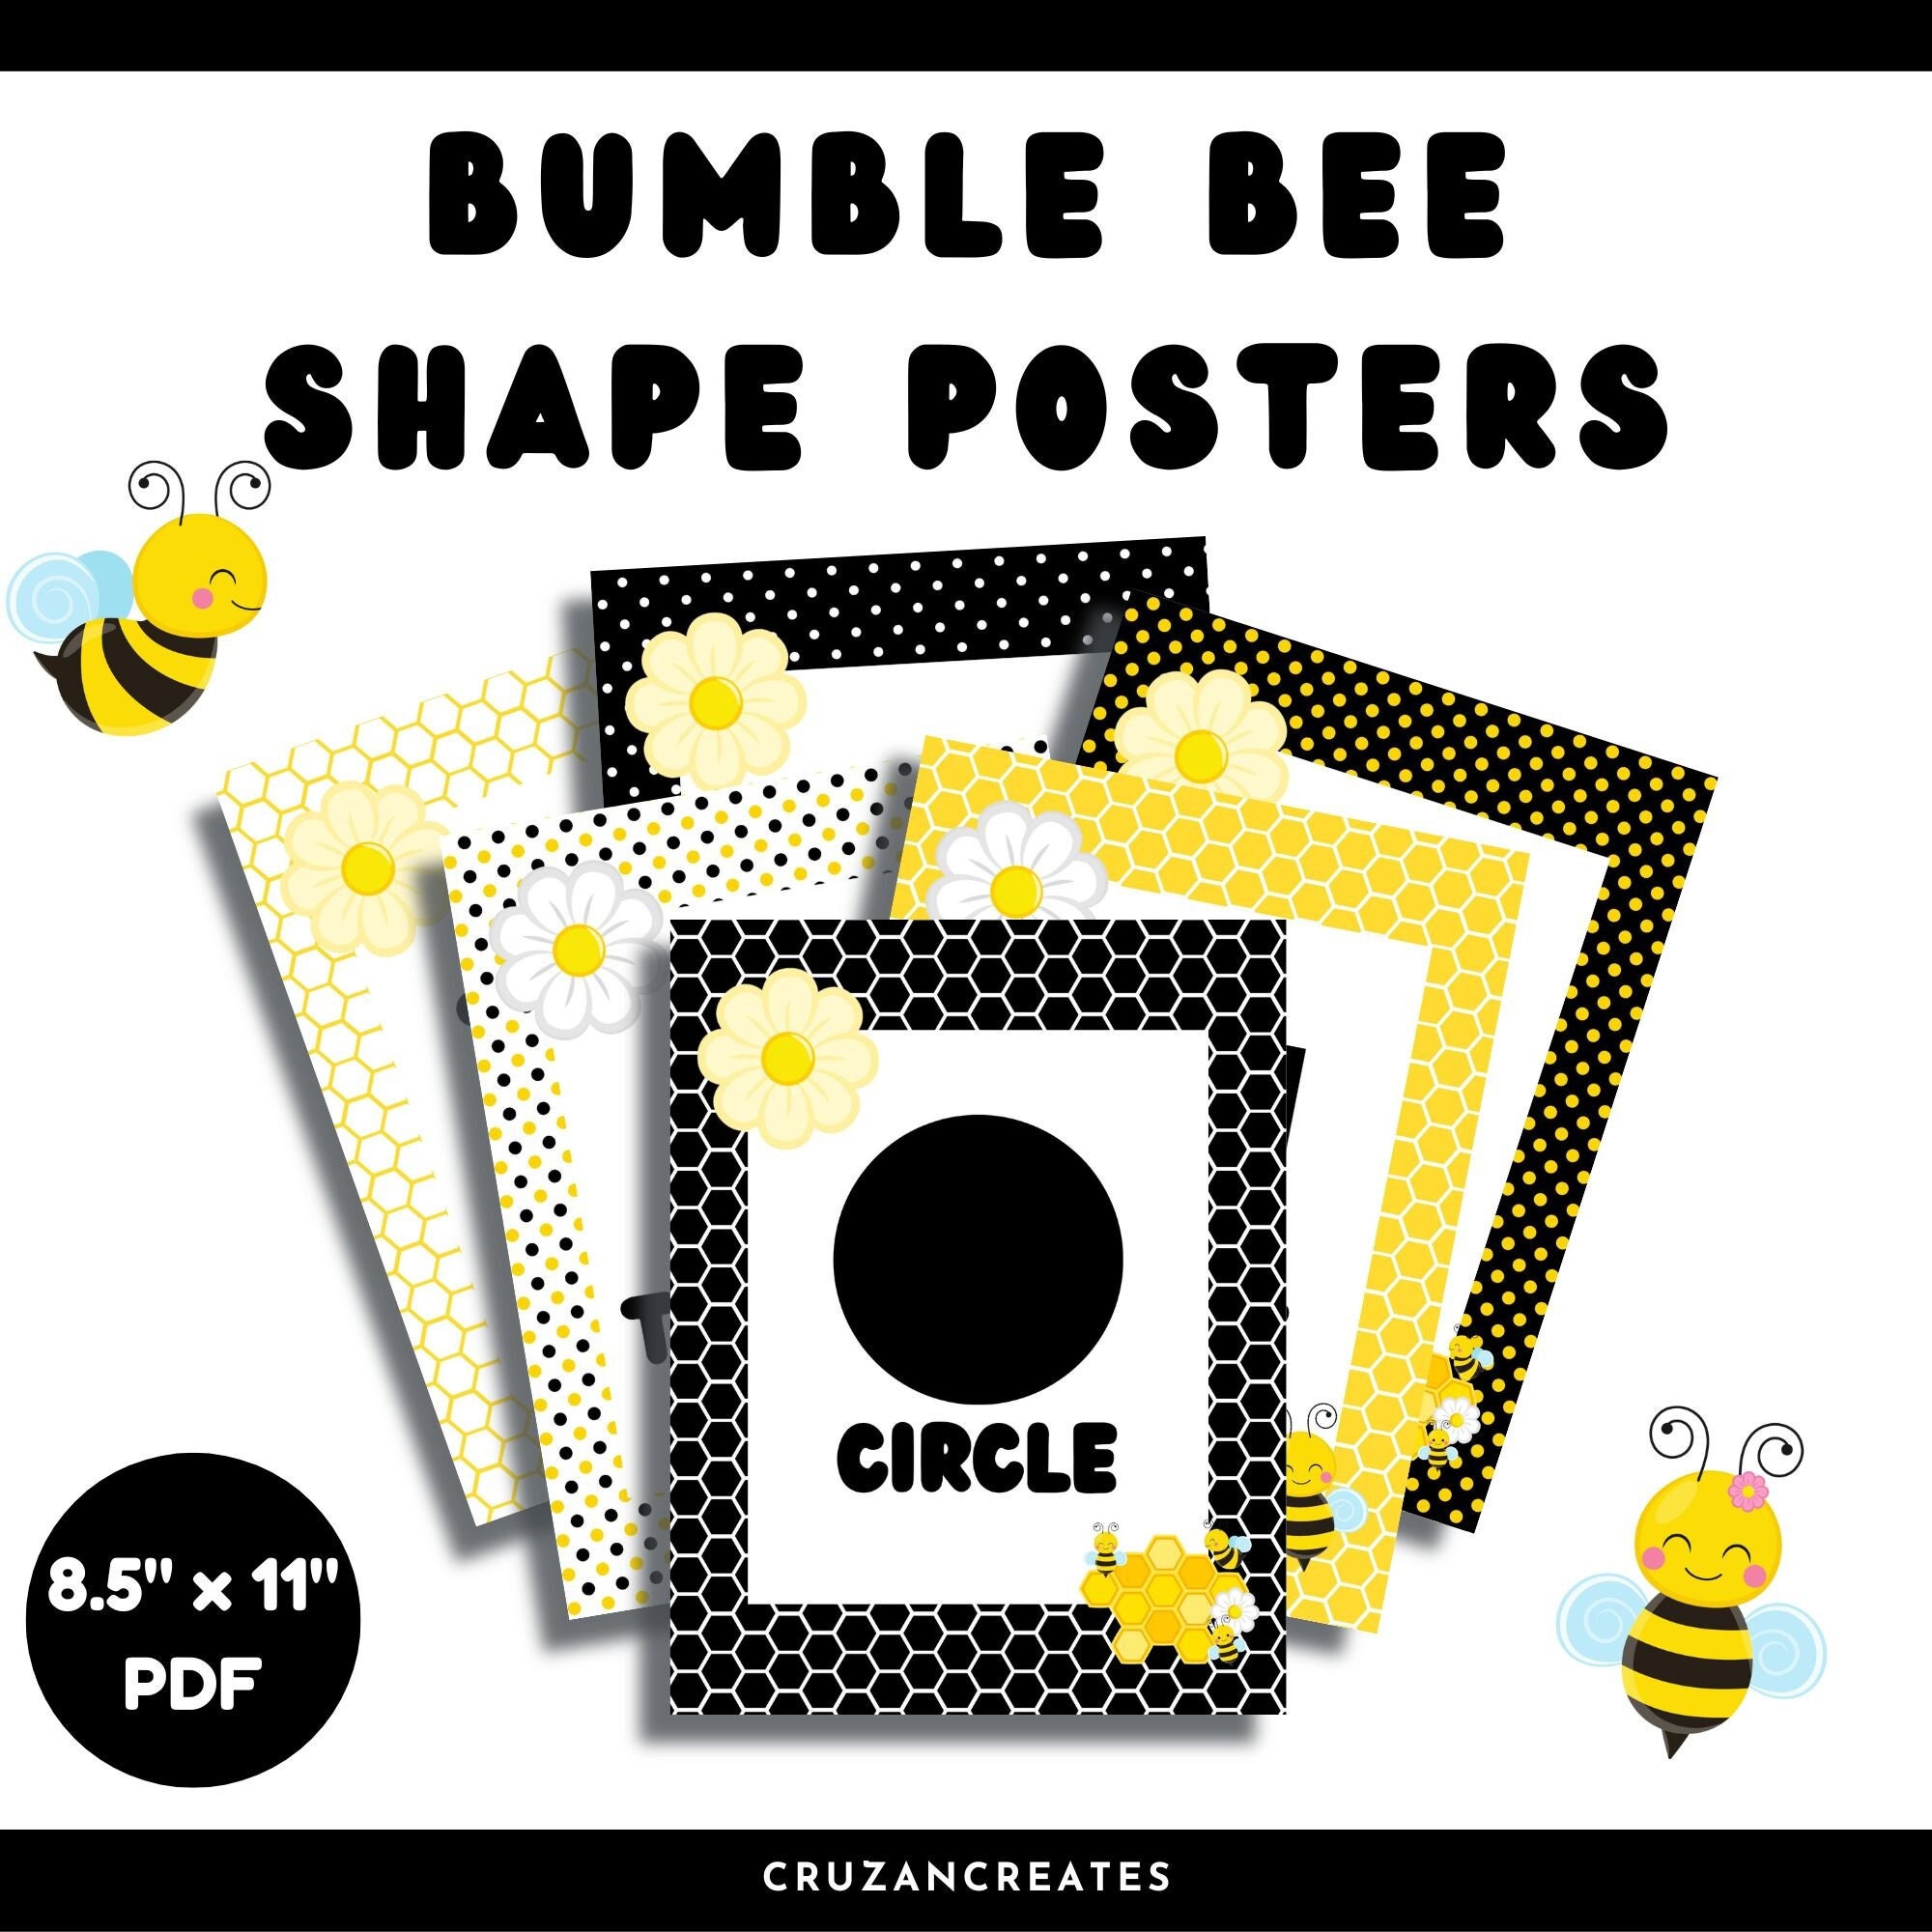 1000 Piece Bumble Bee Stickers for Kids, Teacher Supplies, Classroom  Rewards, Scrapbooking, Crafts, 8 Designs (1.5 In) 